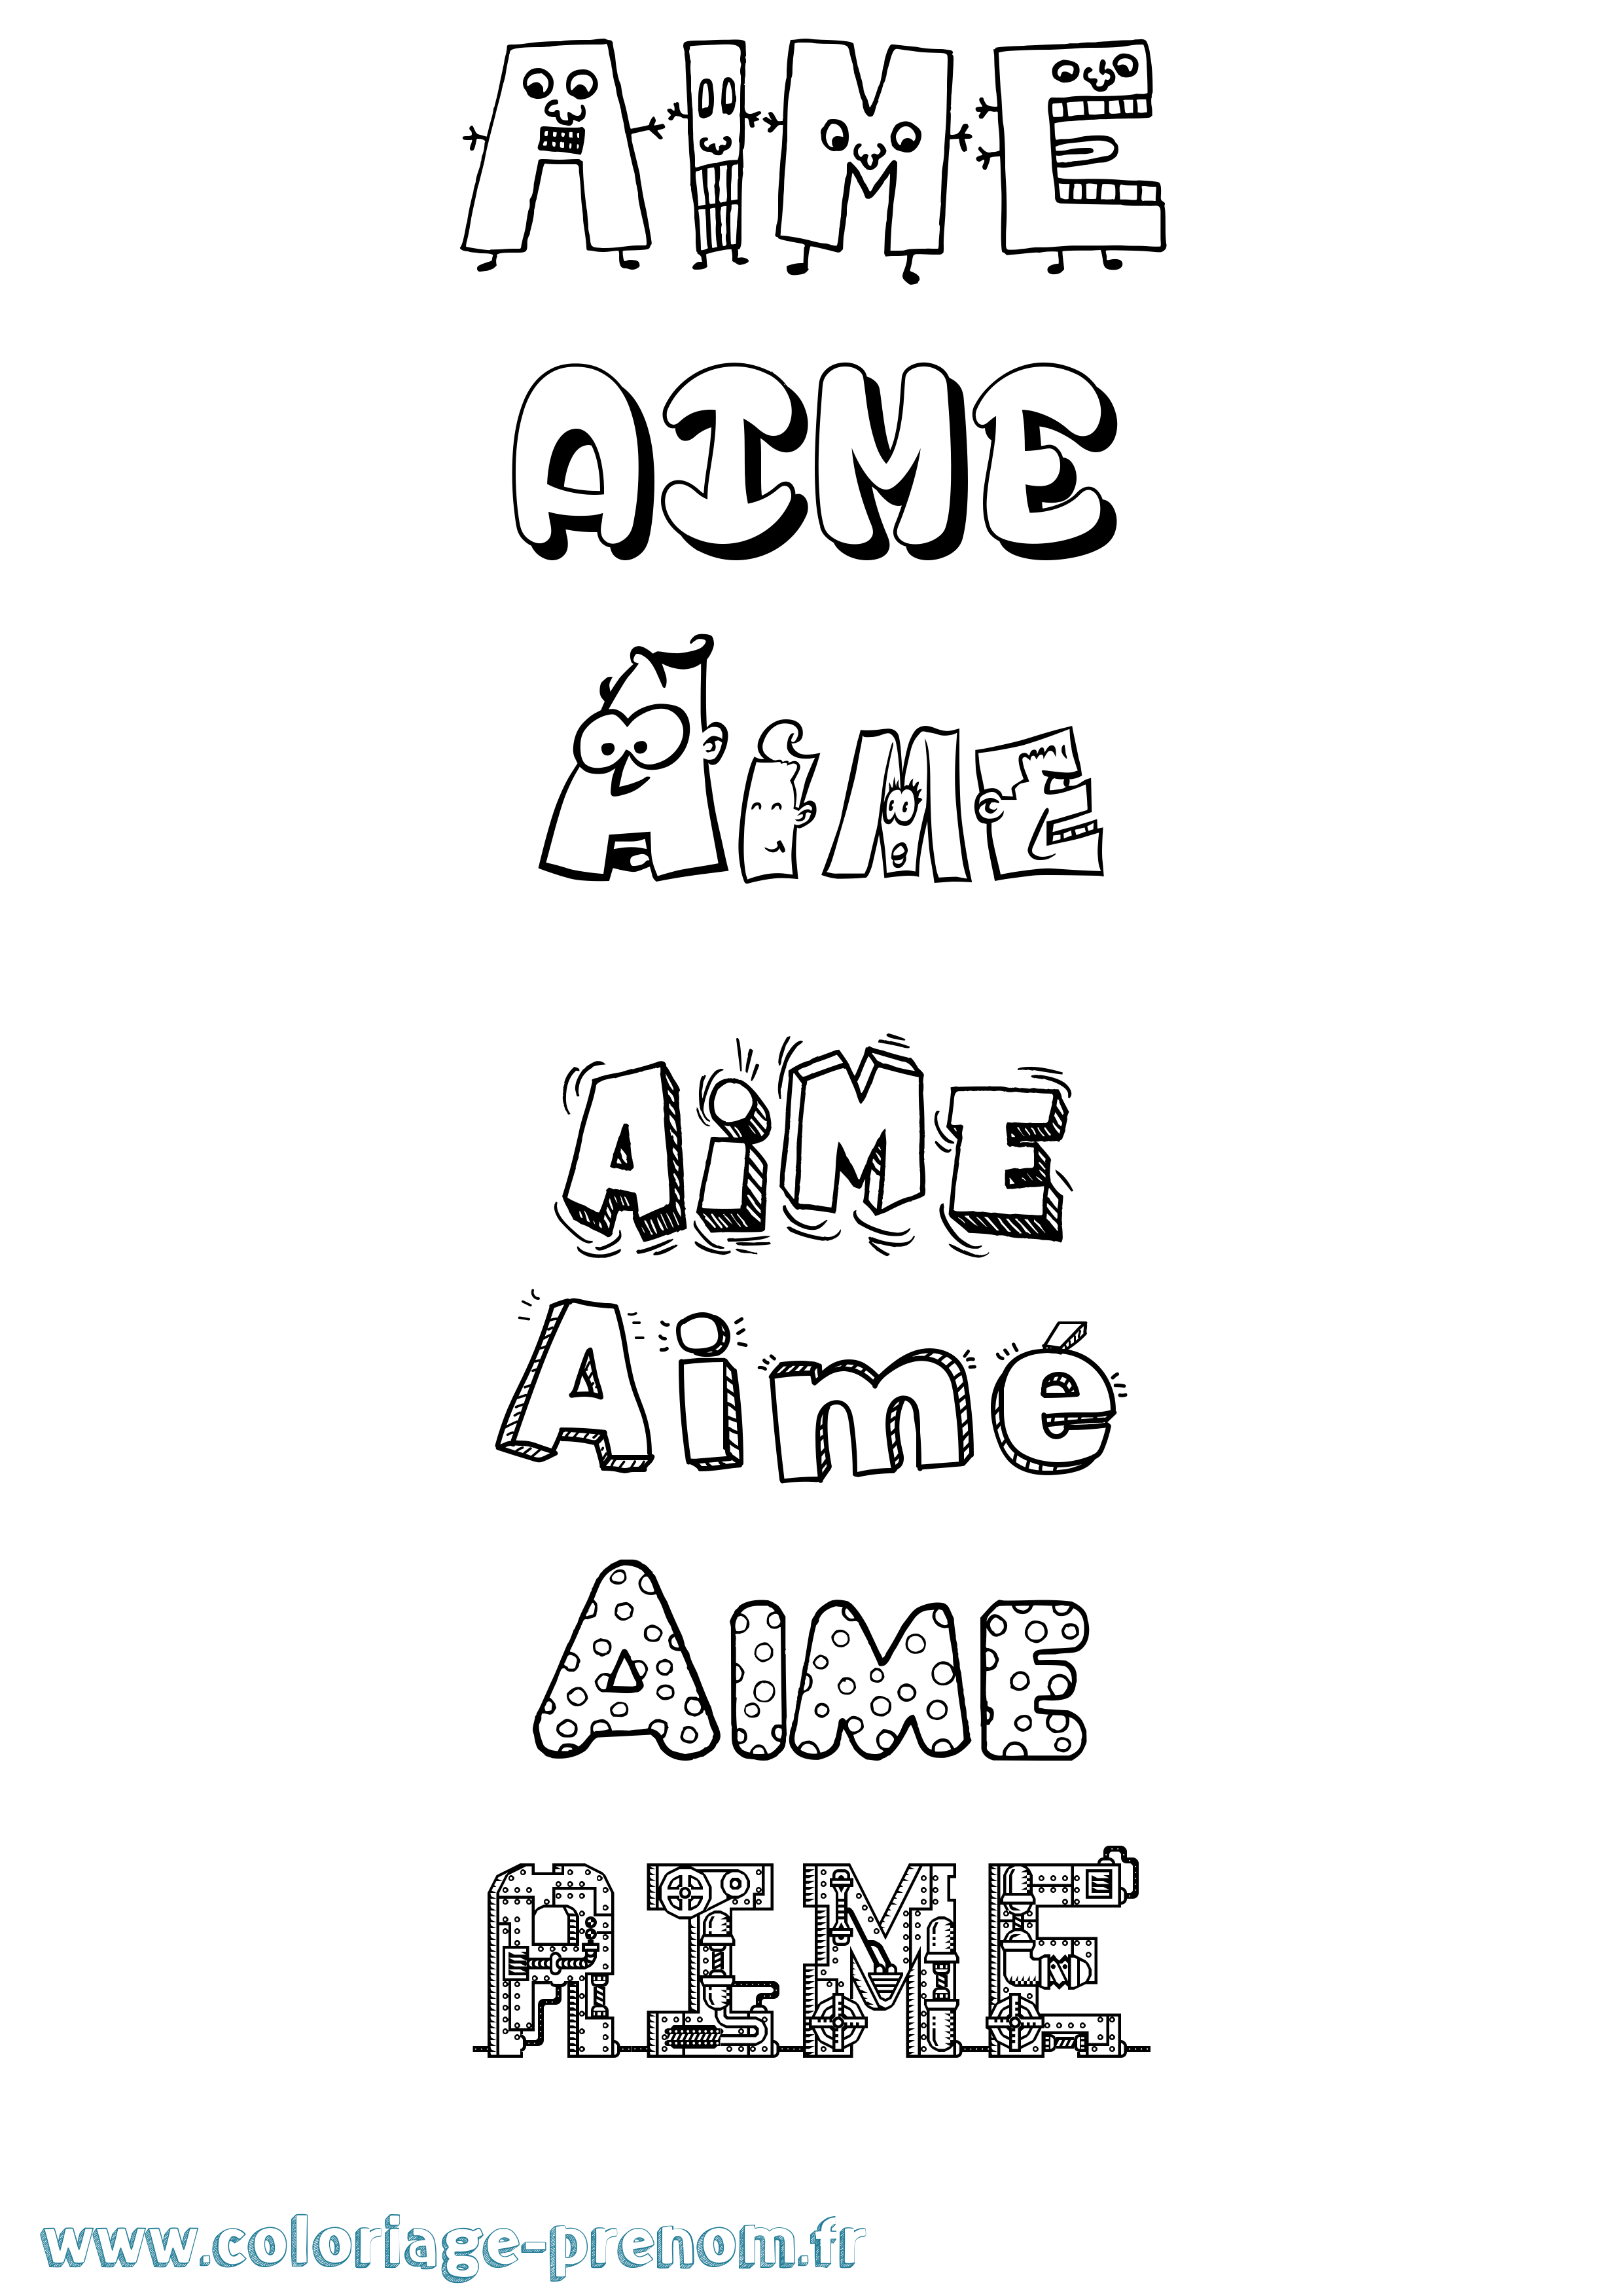 Coloriage prénom Aimé